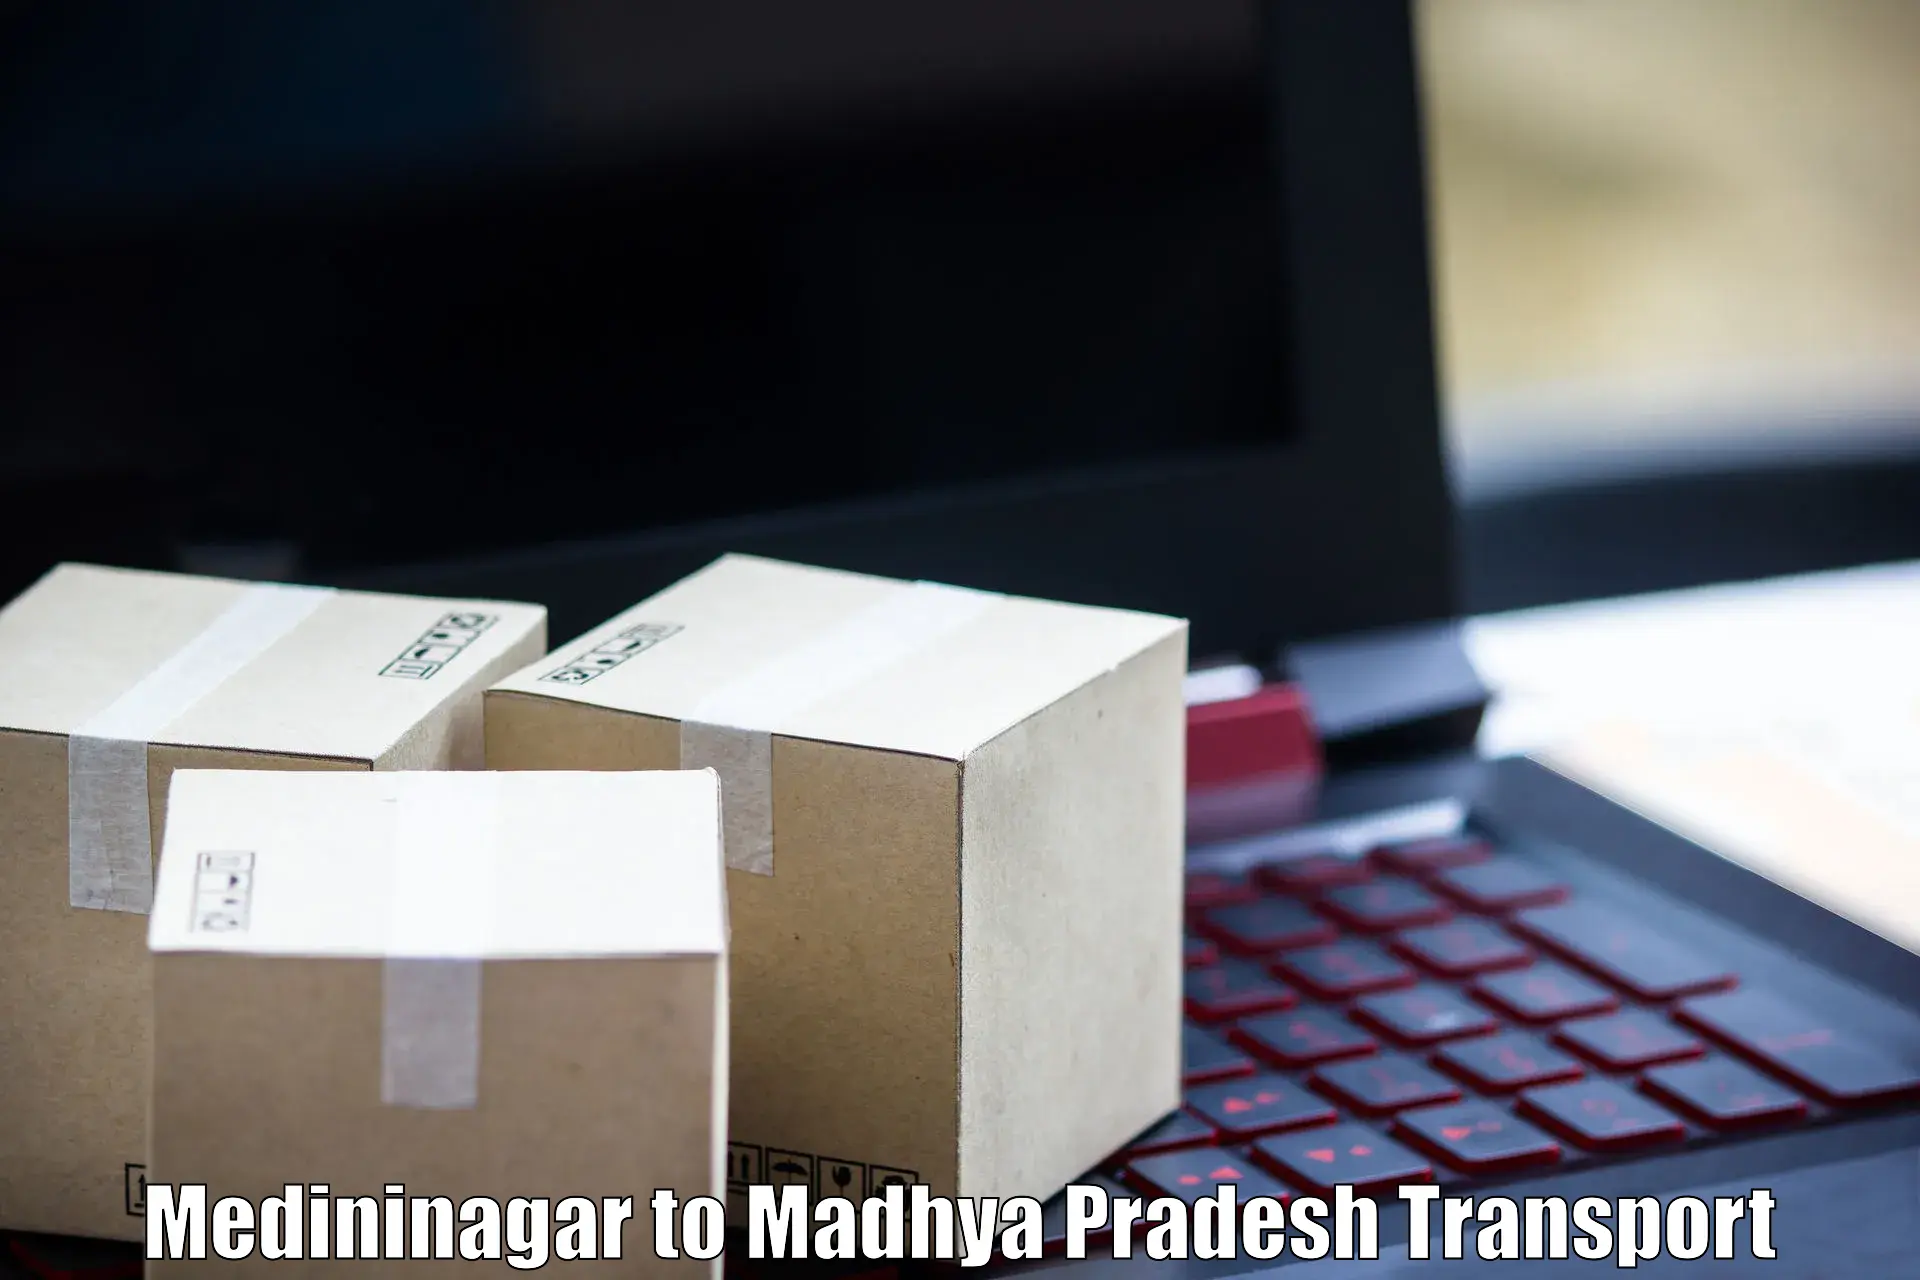 Bike shipping service Medininagar to Madhya Pradesh